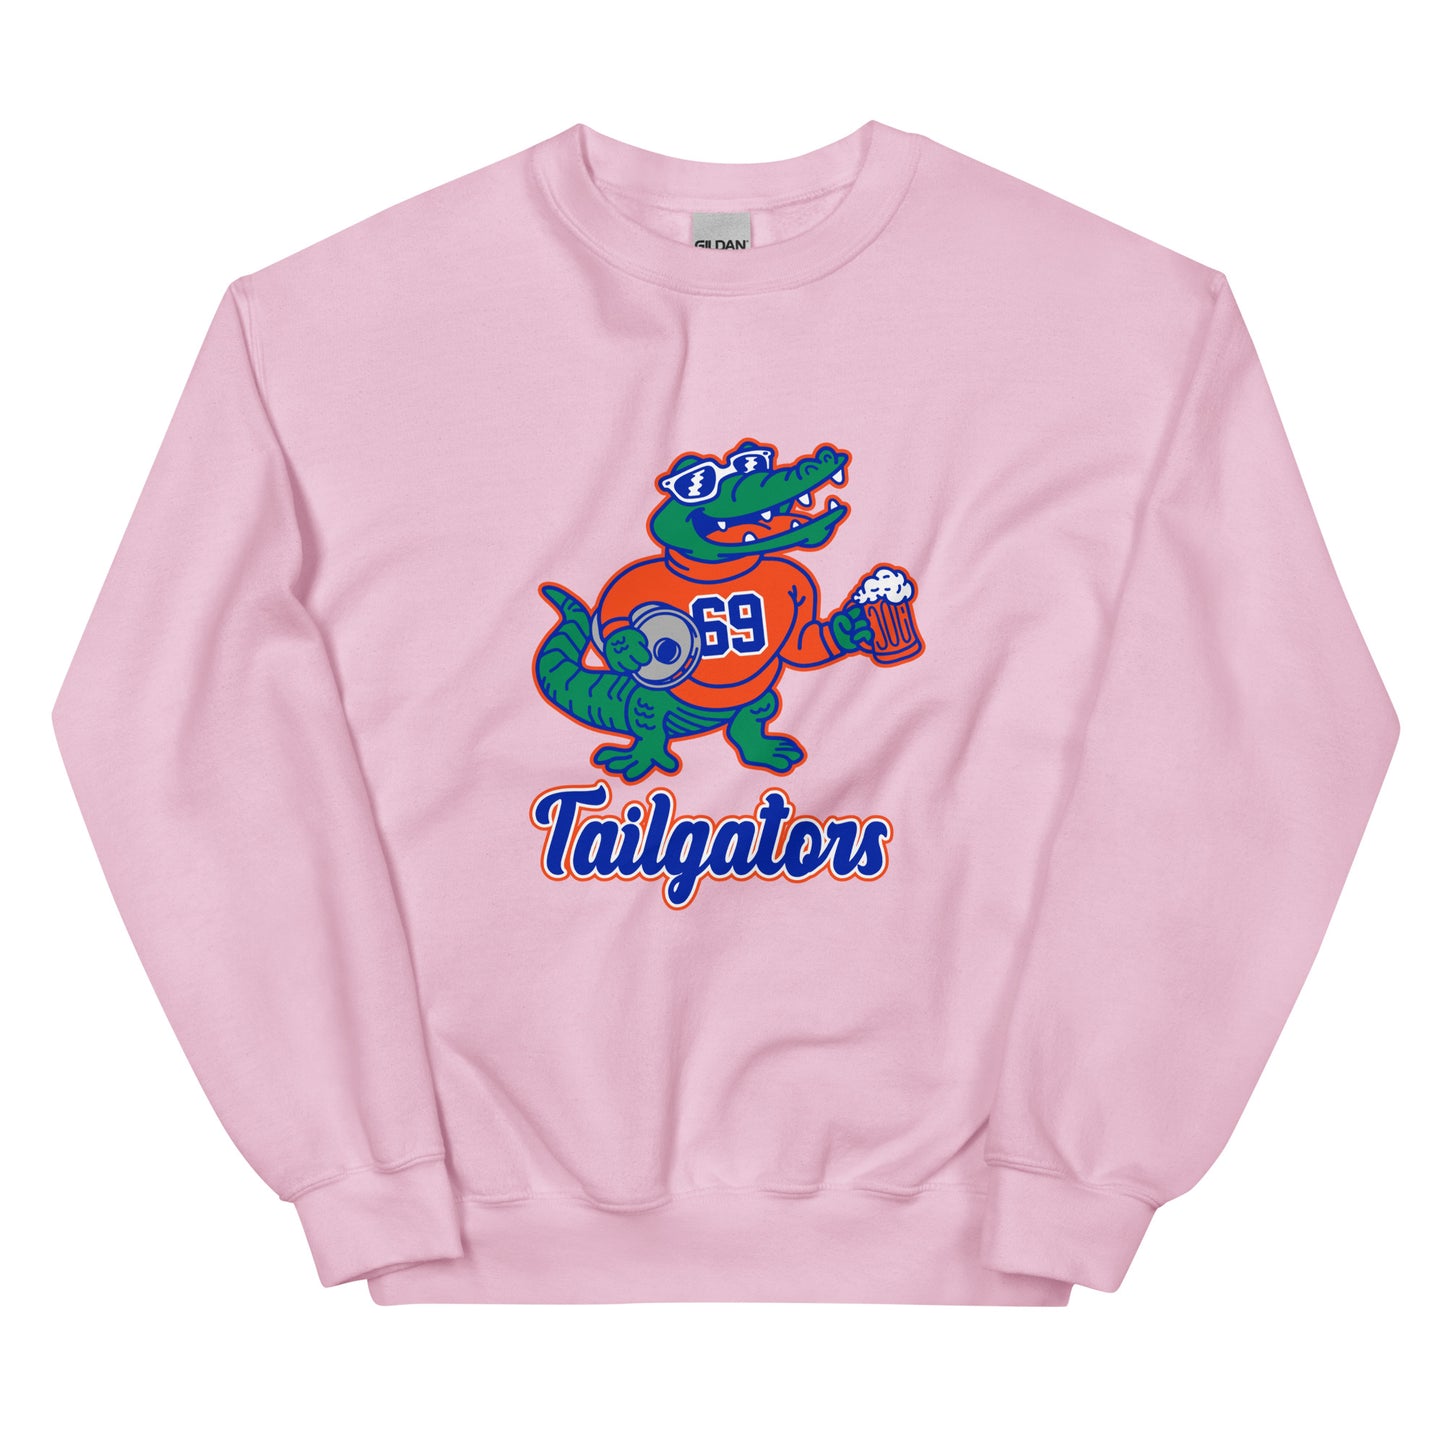 Tailgators Sweatshirt